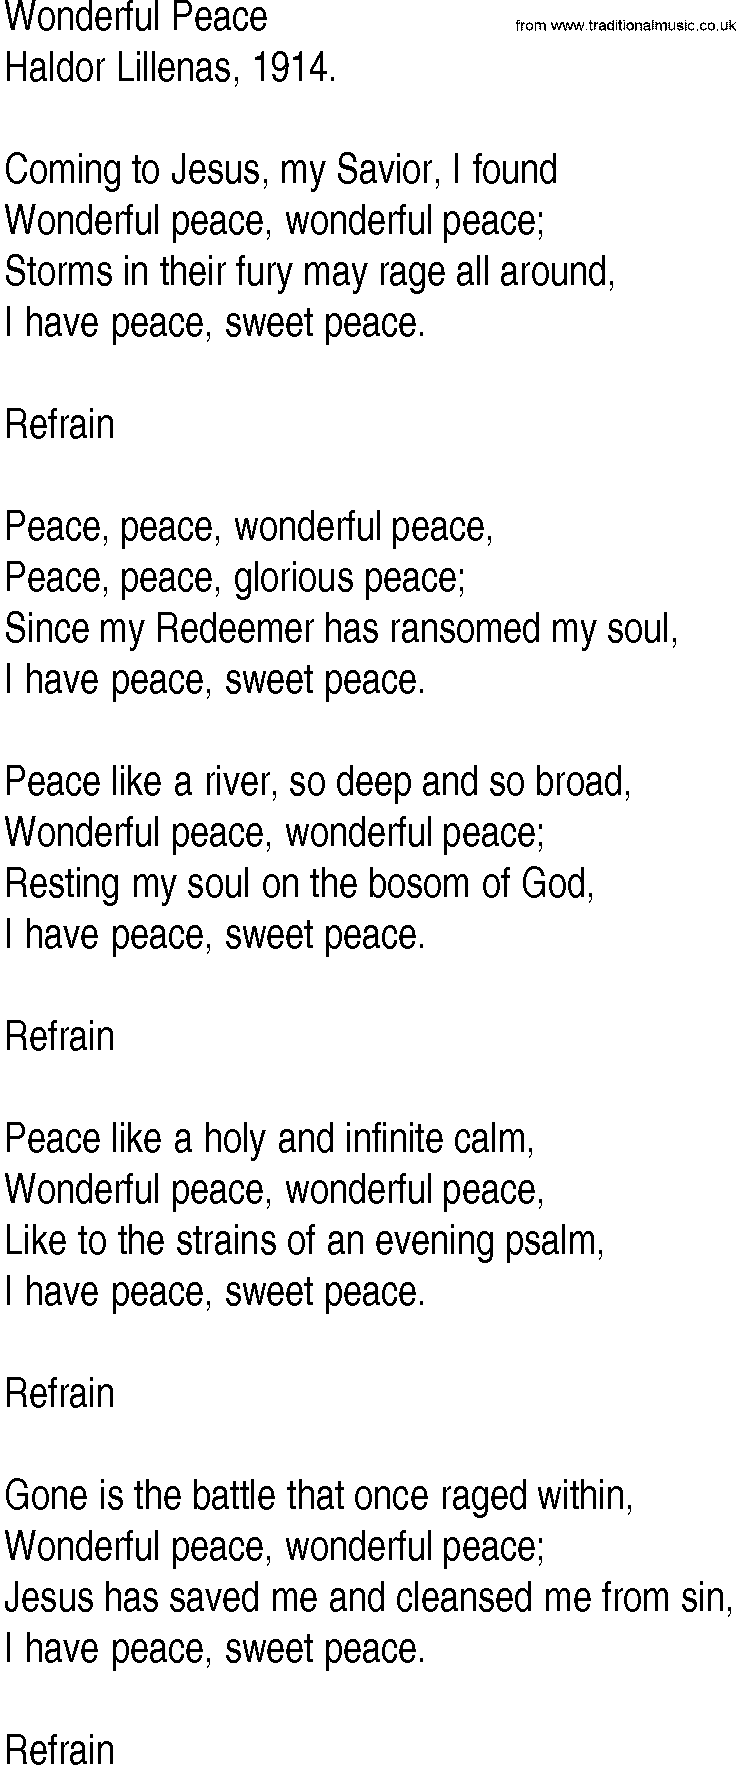 Hymn and Gospel Song: Wonderful Peace by Haldor Lillenas lyrics